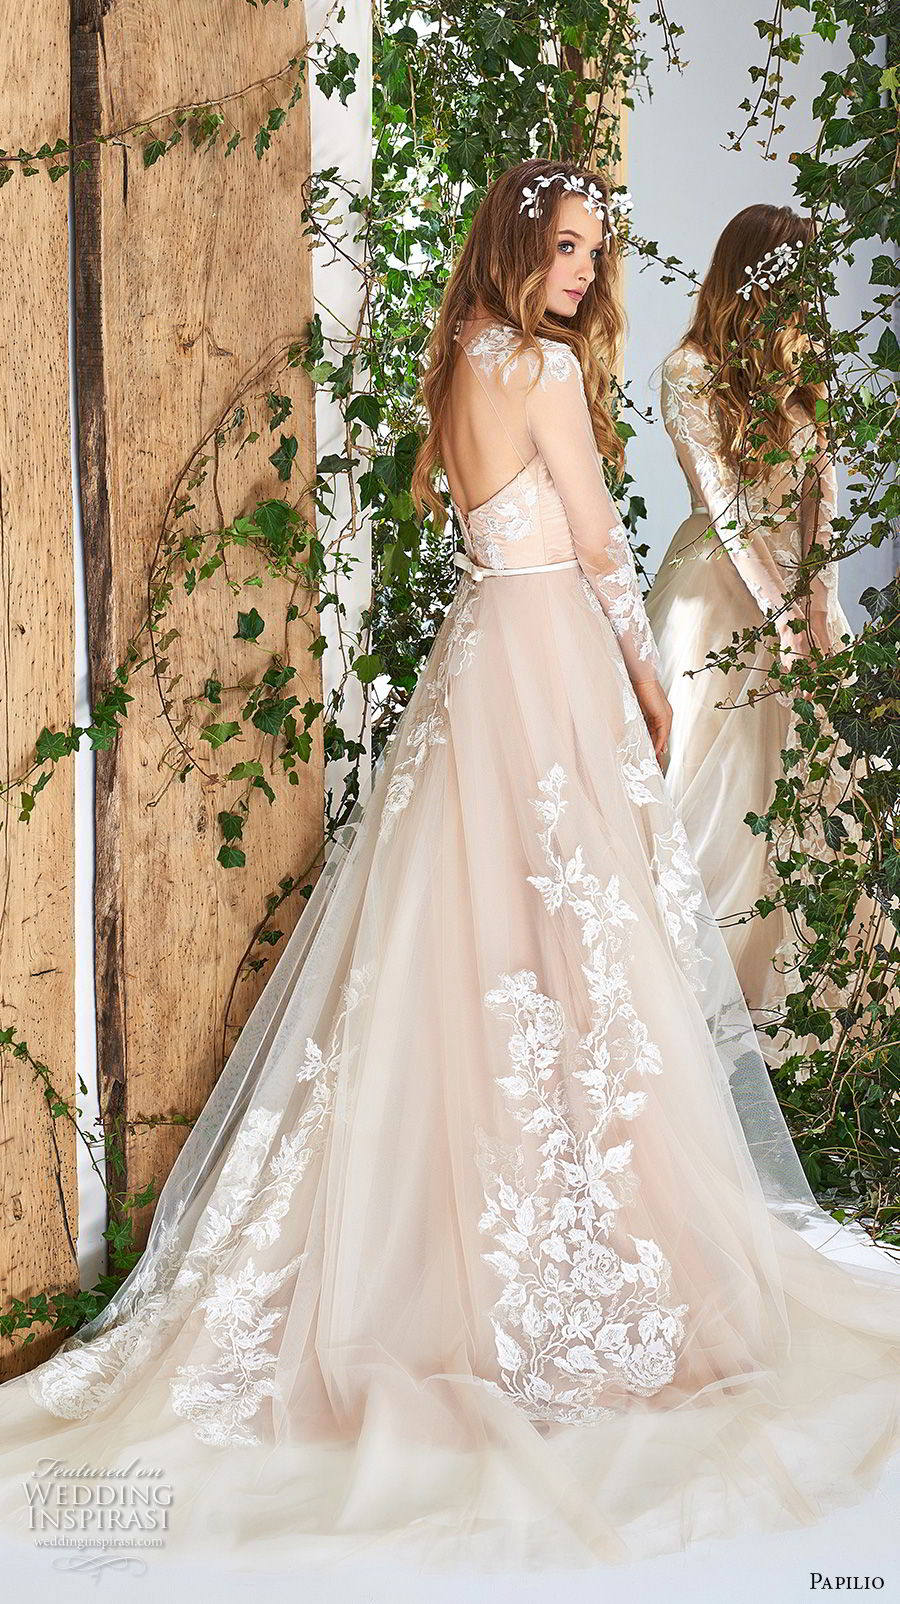 Papilio 2018 Wedding Dresses — “Wonderland” Bridal Collection | Wedding ...